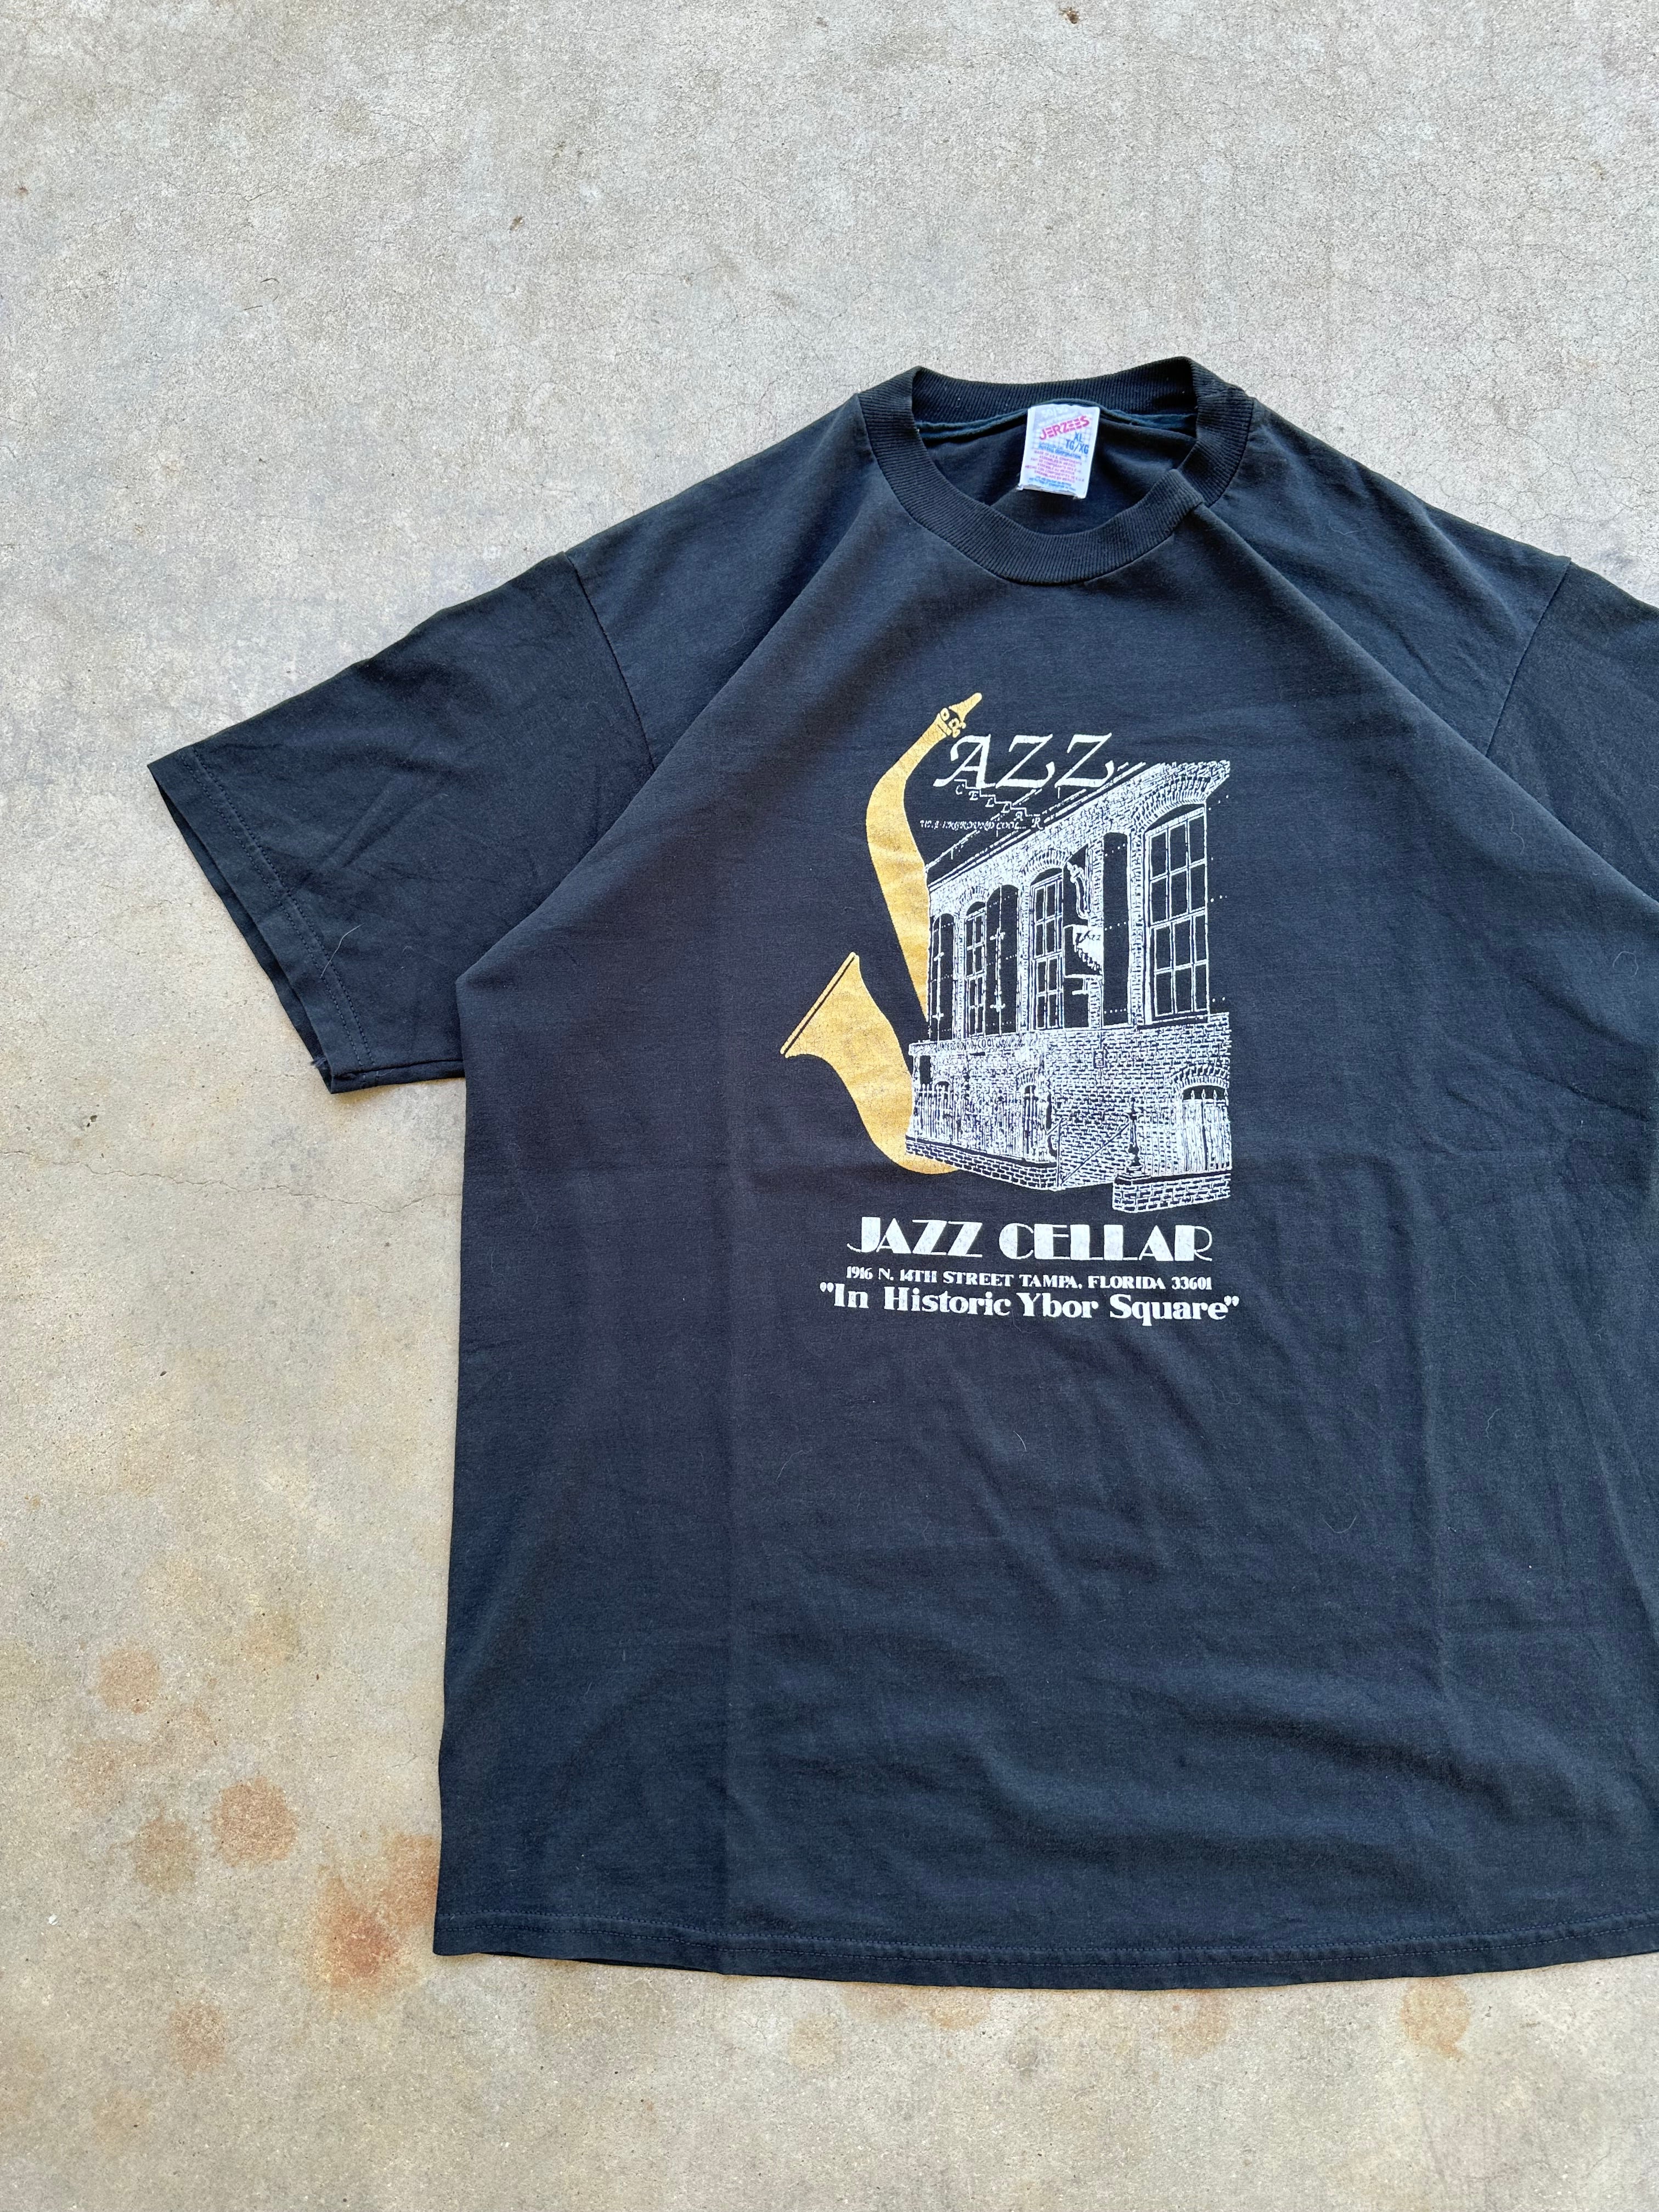 Vintage Jazz Cellar Bird Lives T-Shirt